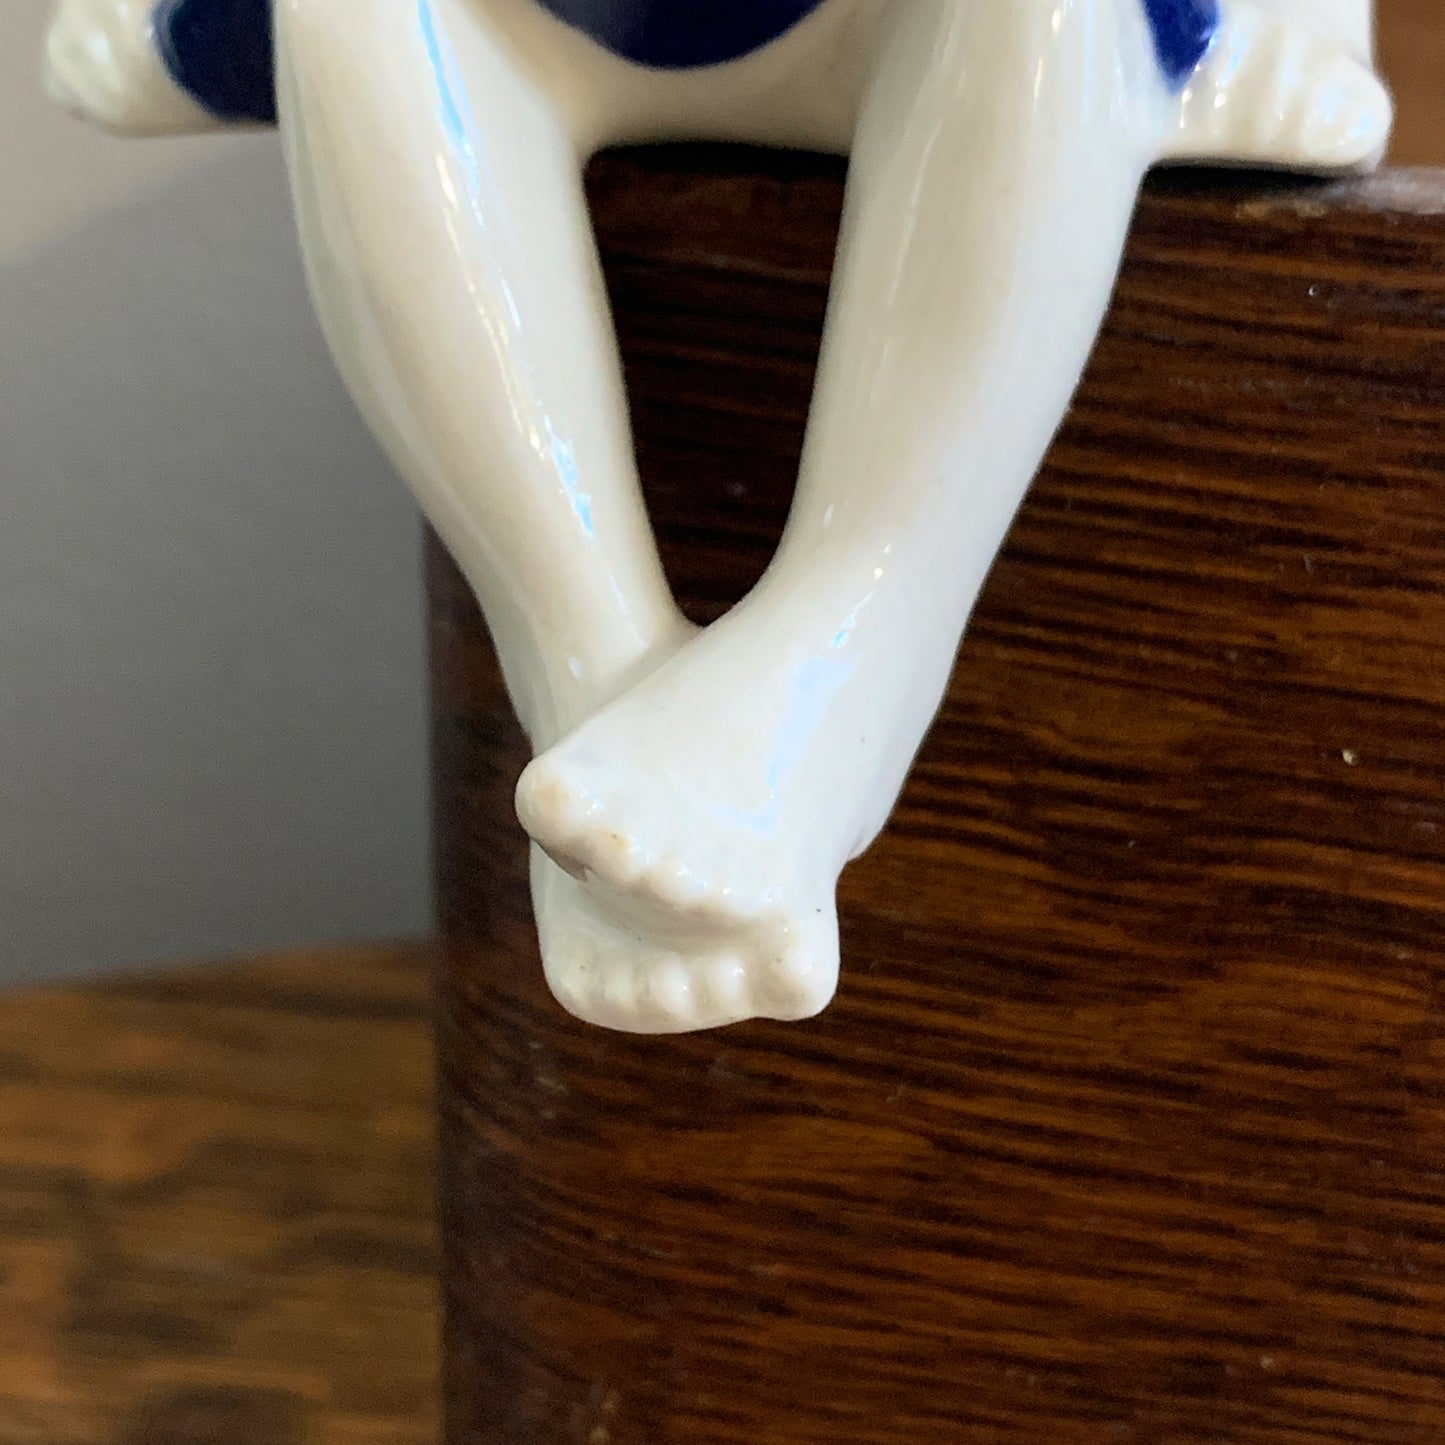 Vintage Ceramic Arts Studios Farm Girl Figurine Shelf Sitter Repaired